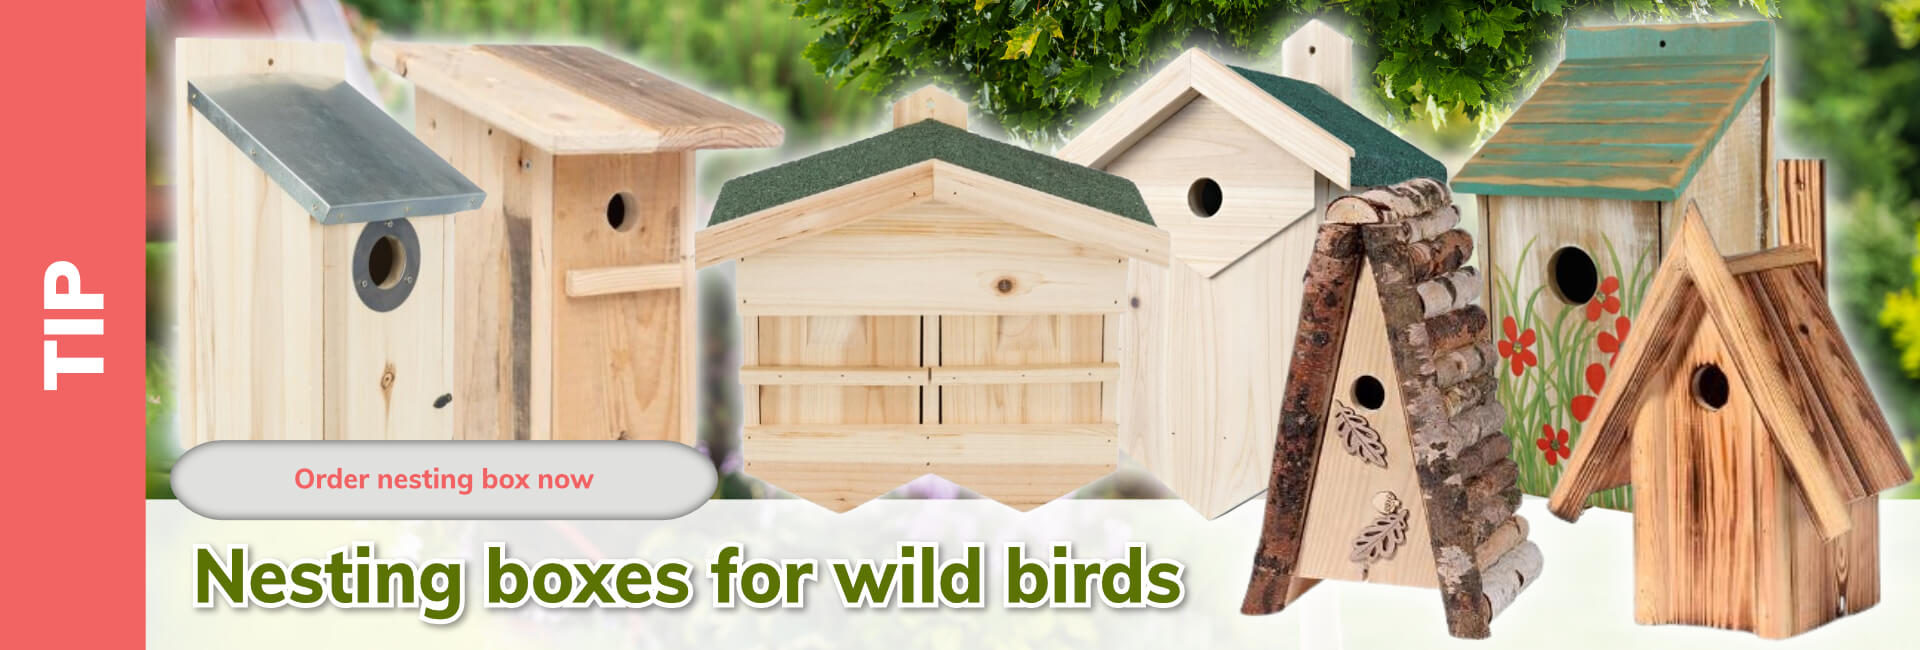 Nesting boxes for wild birds